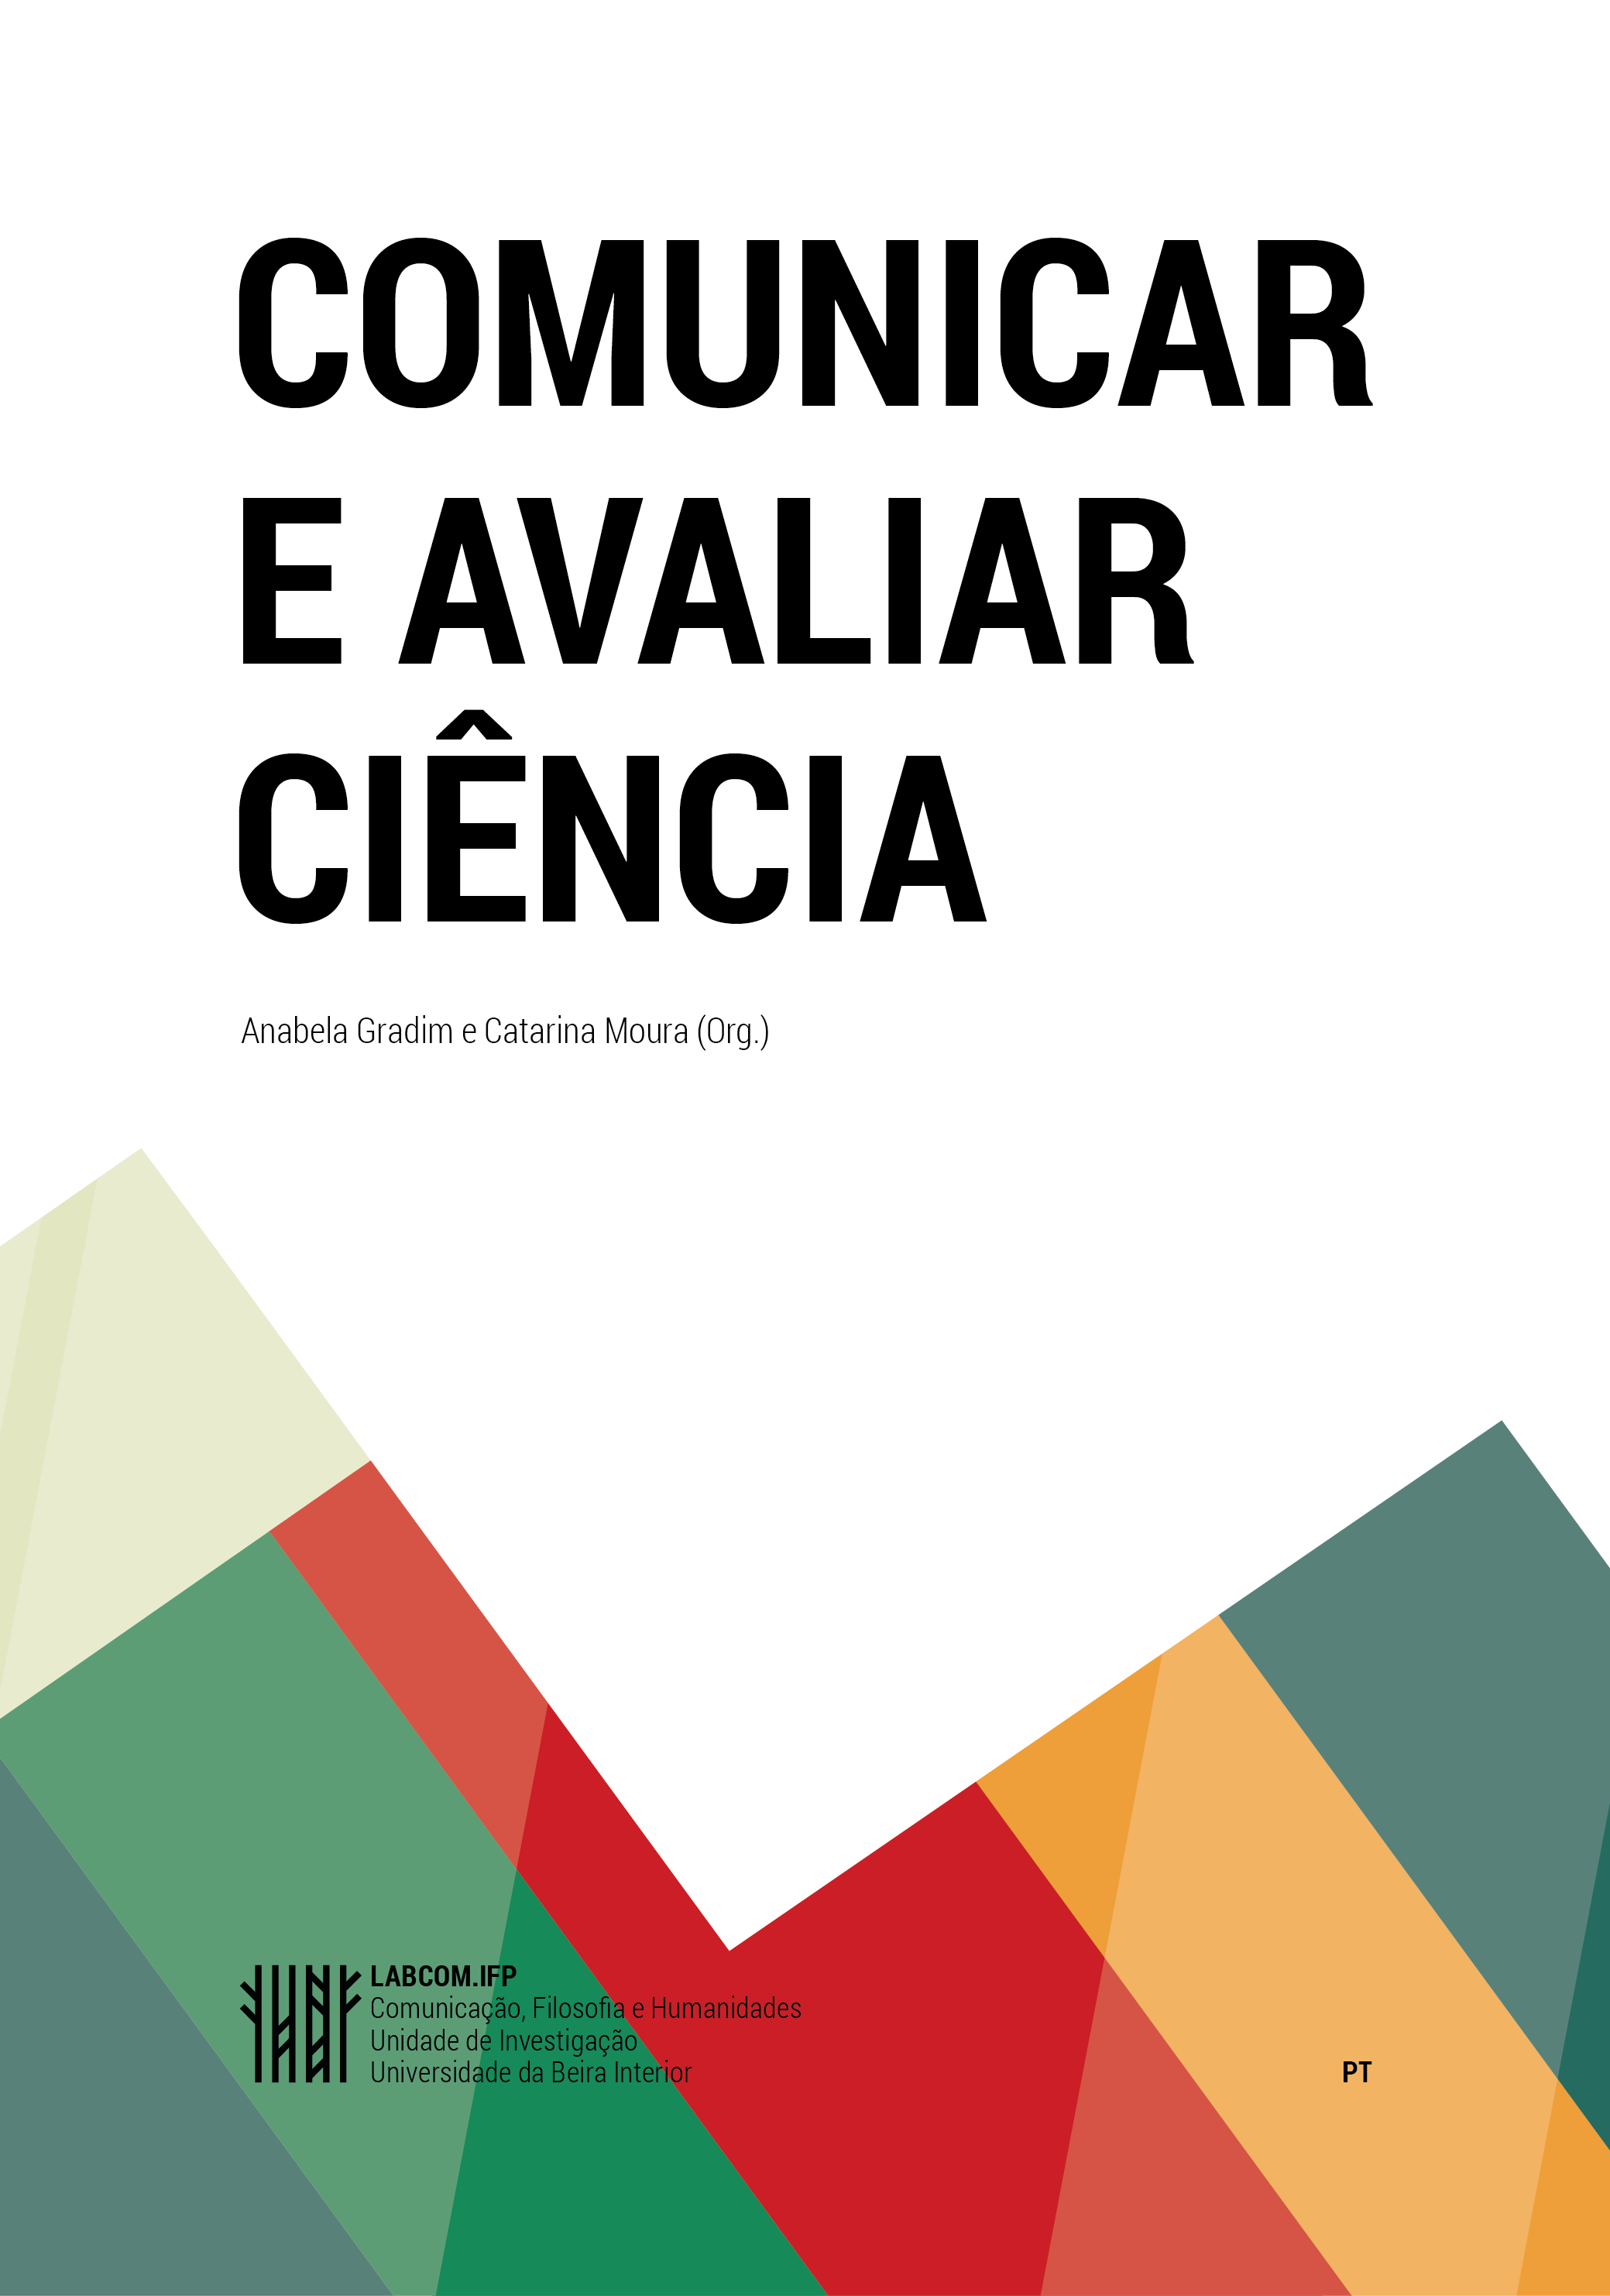 Capa: Anabela Gradim e Catarina Moura (Org.) (2015) Comunicar e Avaliar Ciência. Communication  +  Philosophy  +  Humanities. .